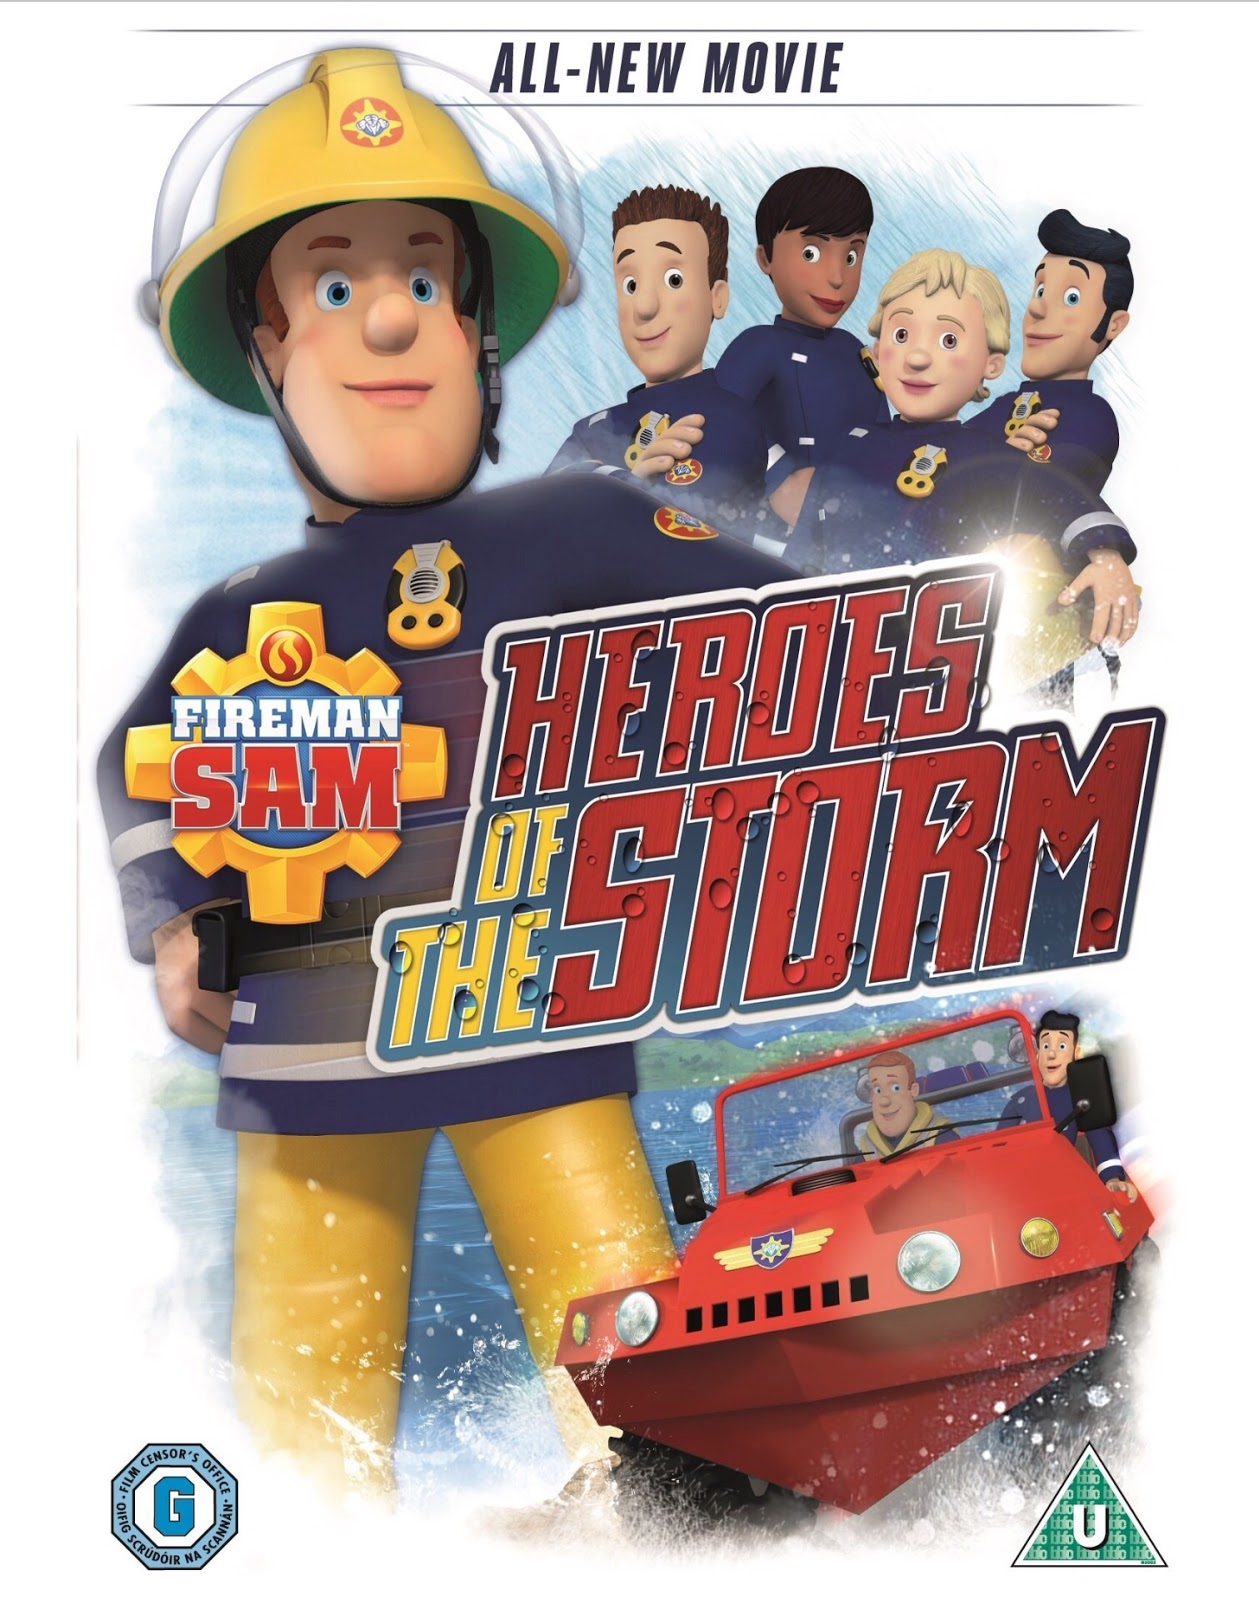 Fireman Sam Heroes Of The Storm 2015 - Full (HDRIP)